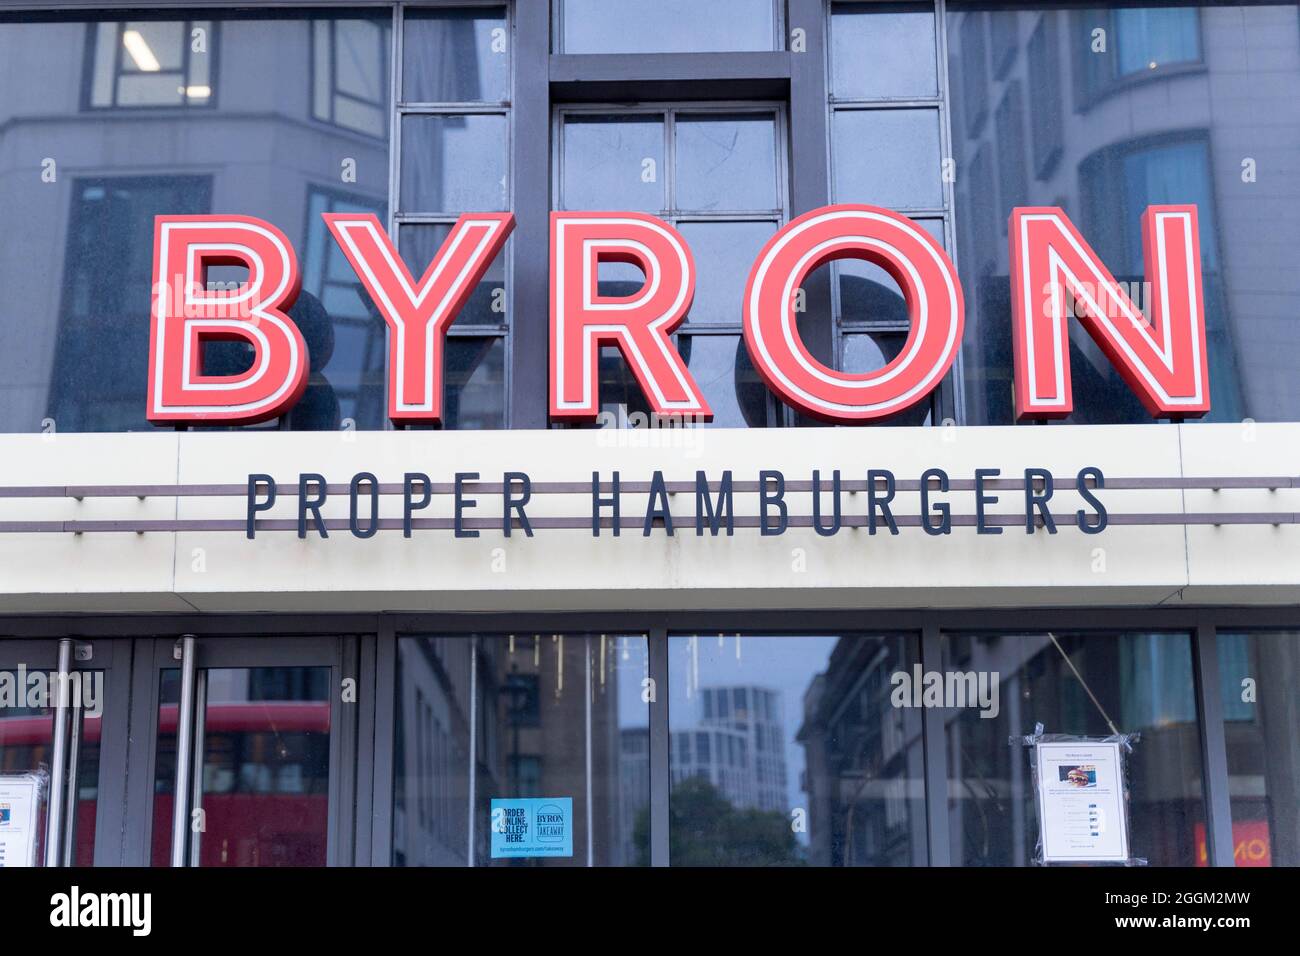 BYron the proper hamburgers, restaurant, fast food, london Stock Photo